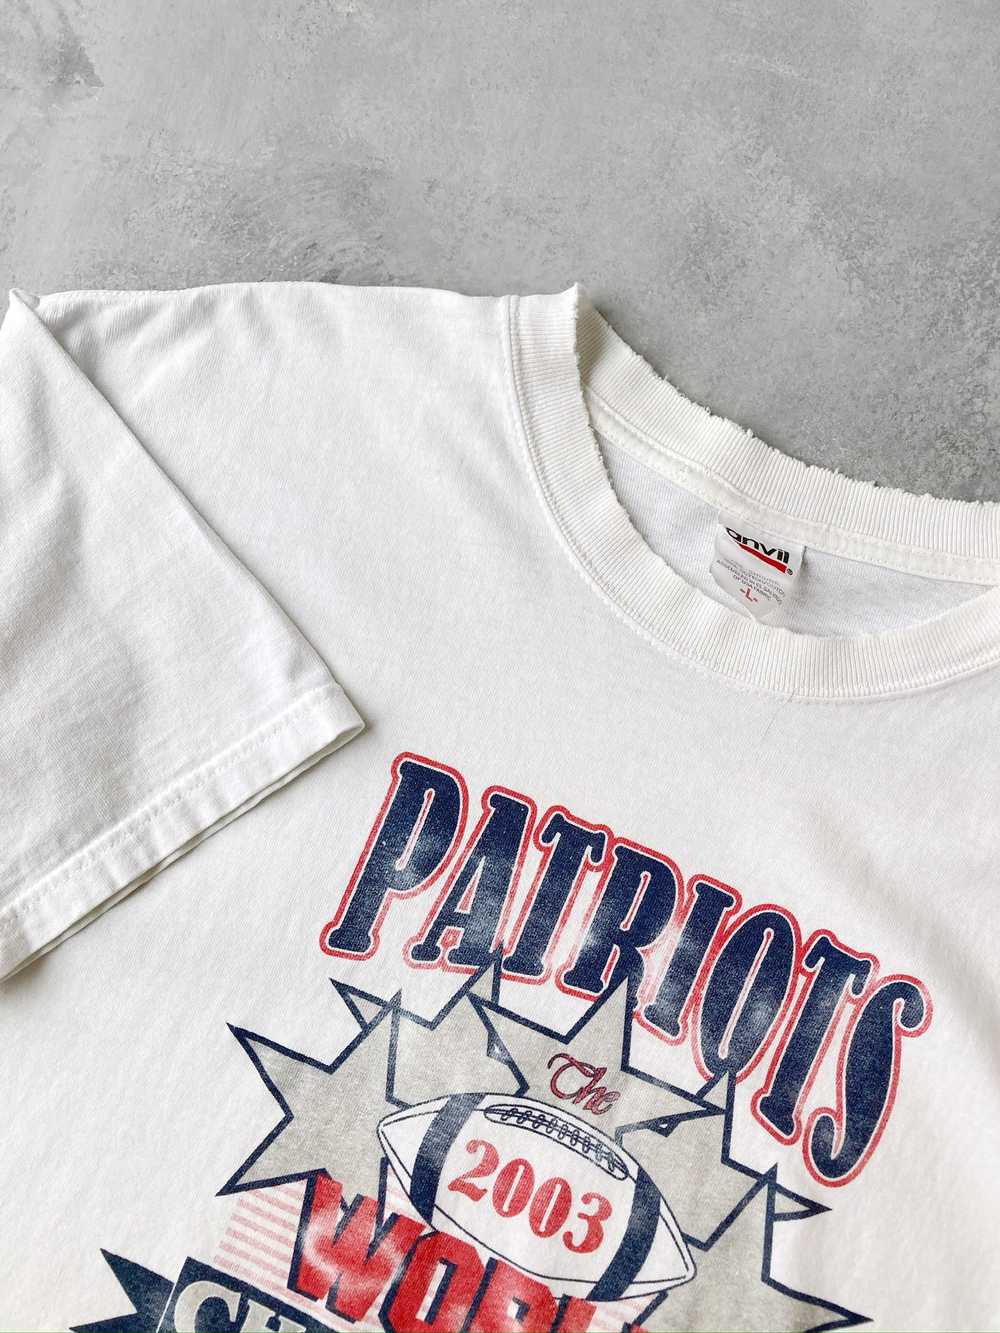 New England Patriots T-Shirt '03 - Large - image 2